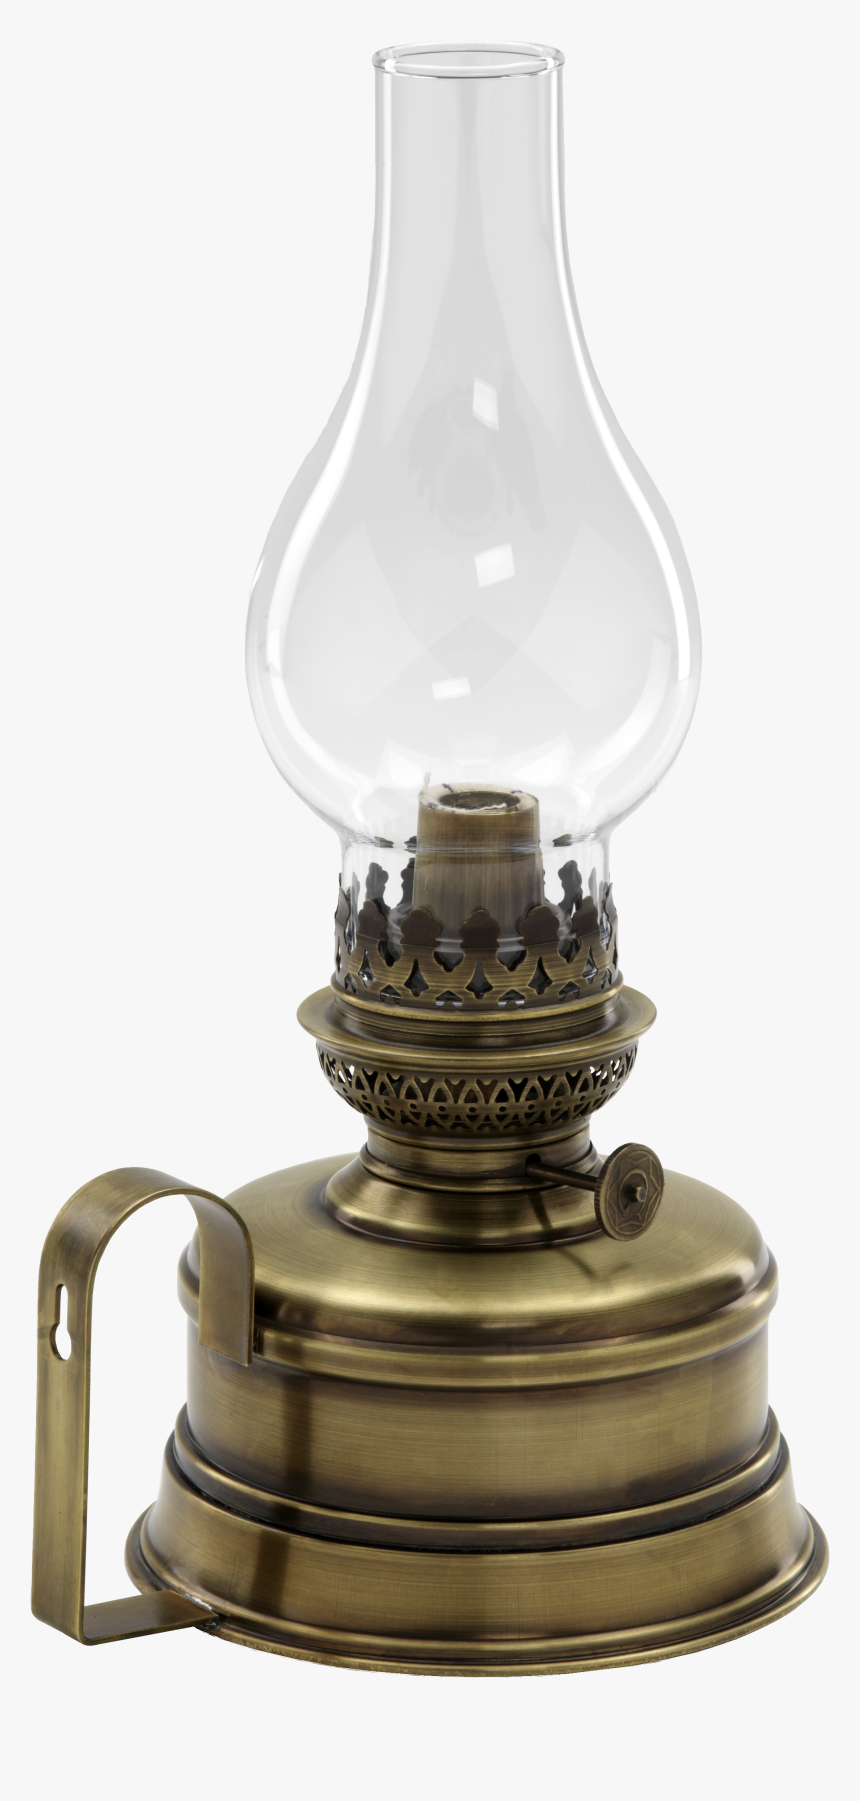 Oil Lamp Png, Transparent Png, Free Download